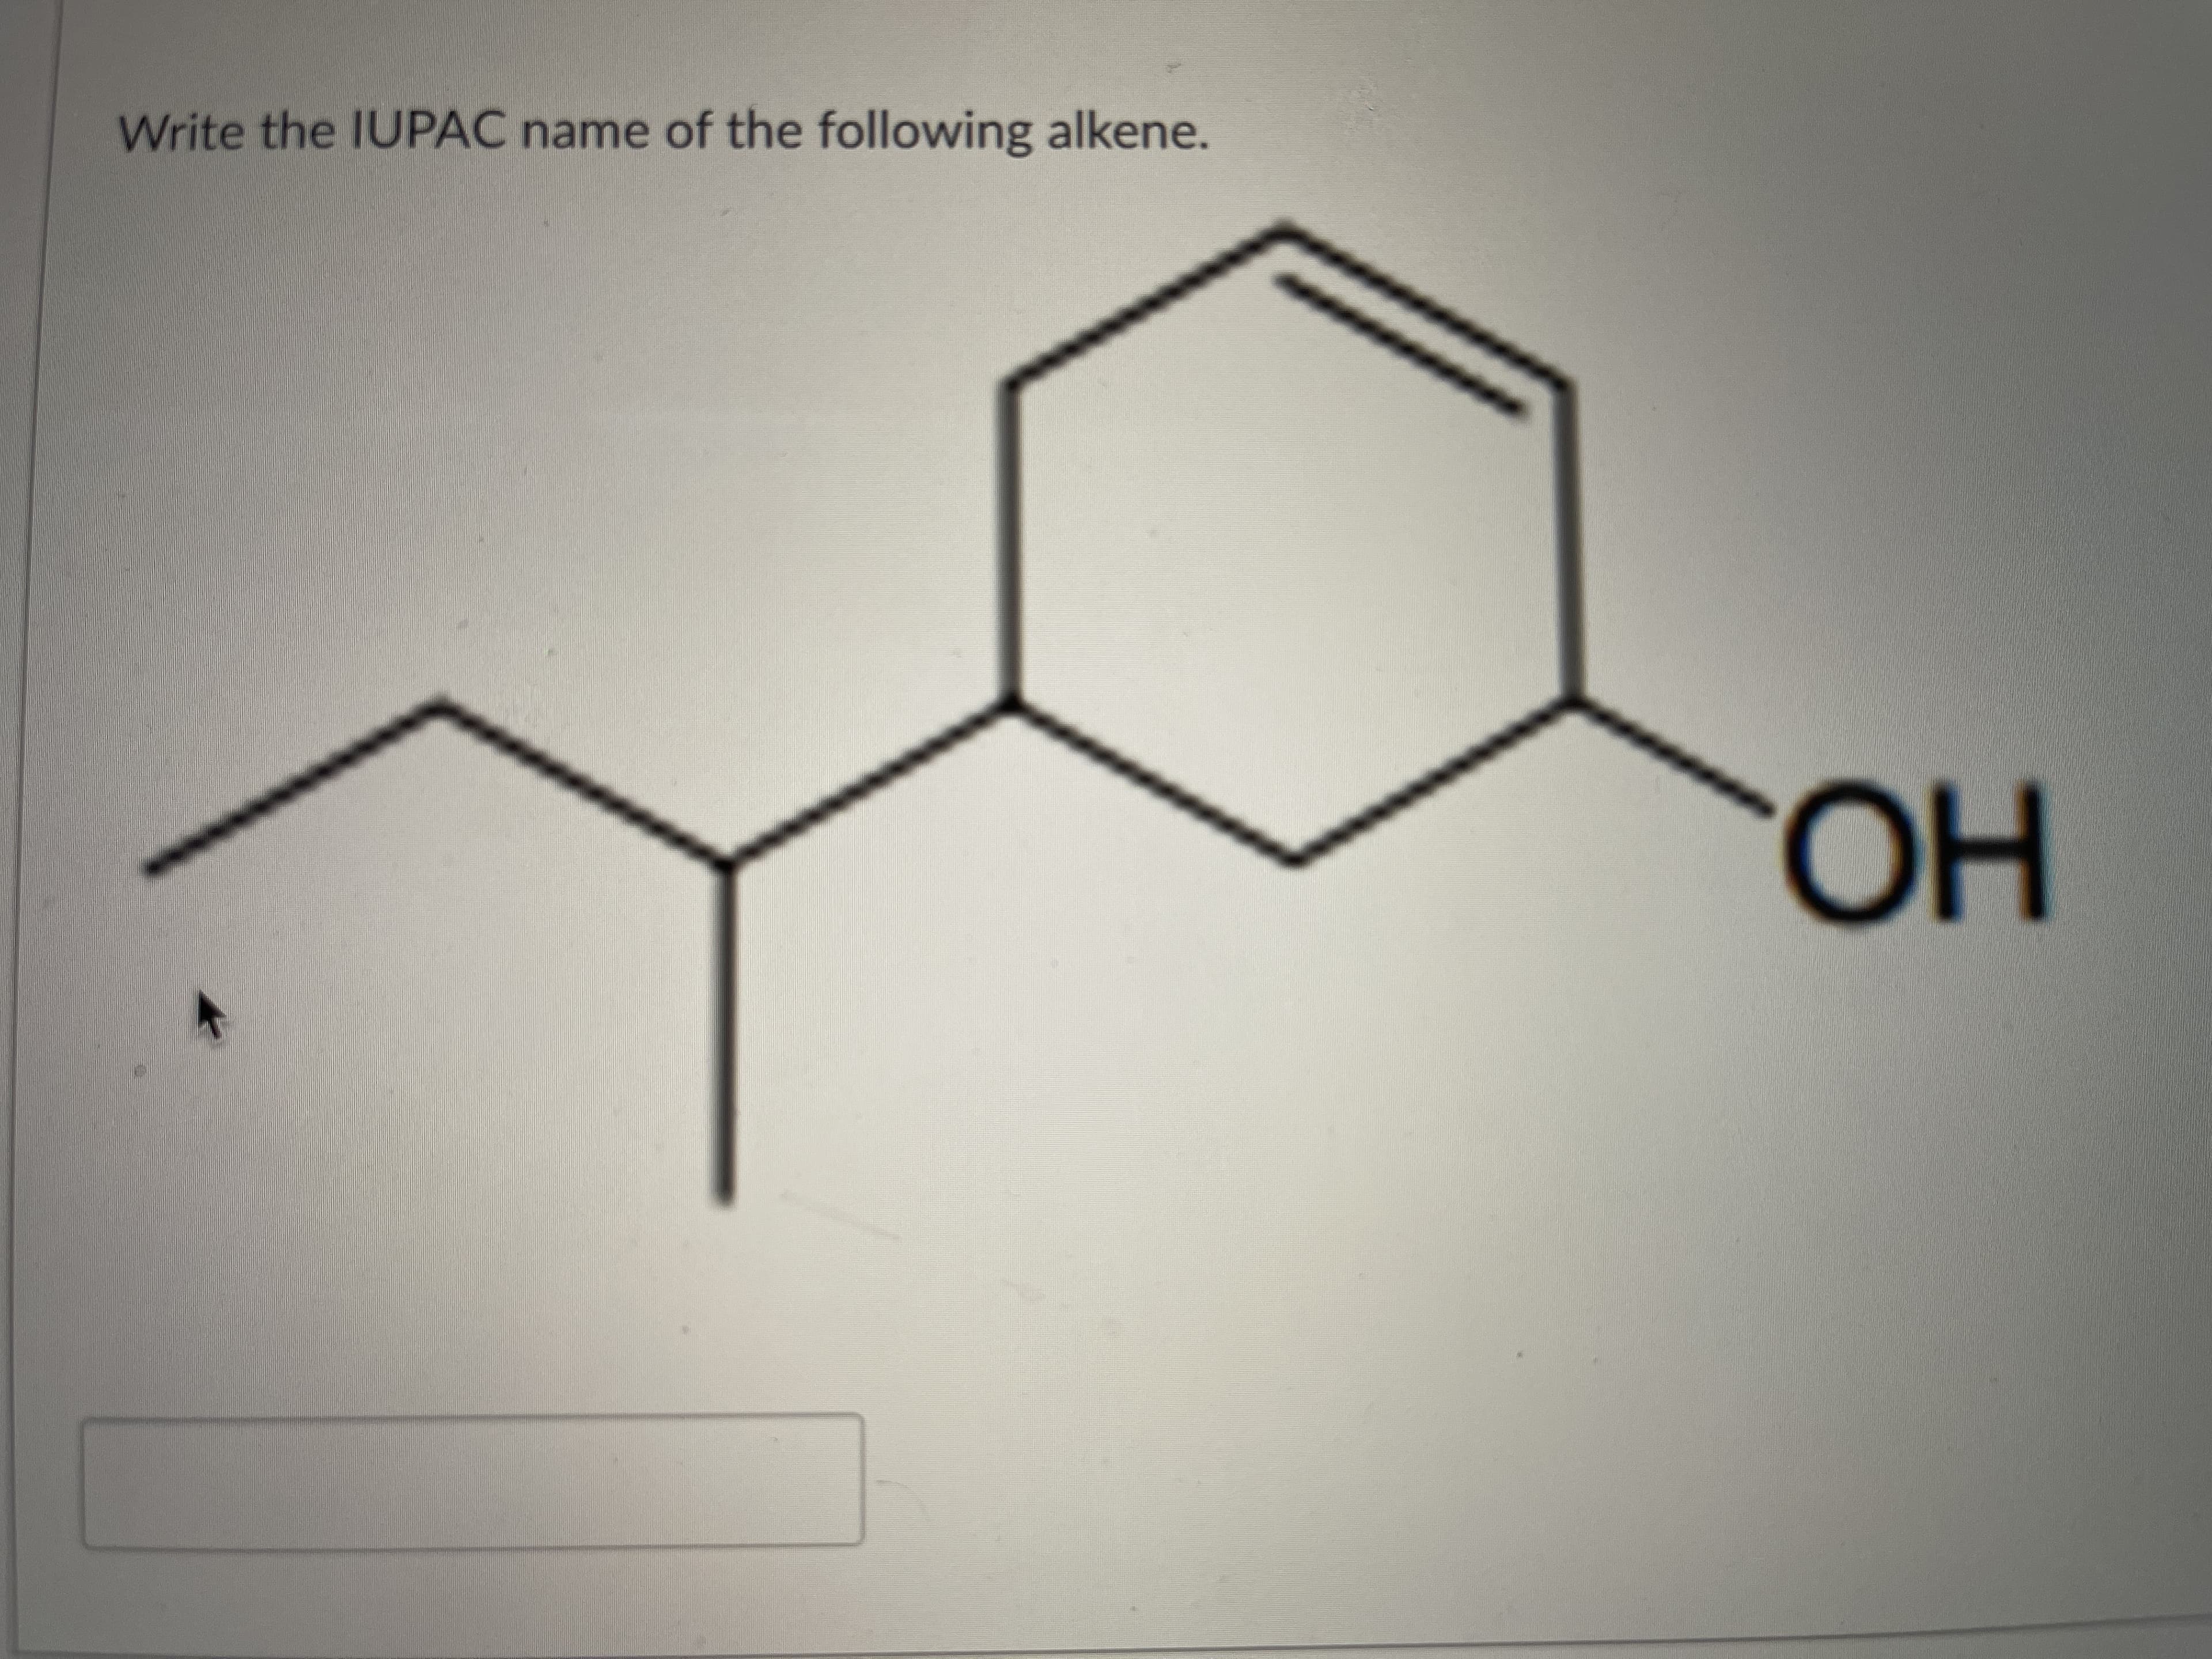 но
Write the IUPAC name of the following alkene.
